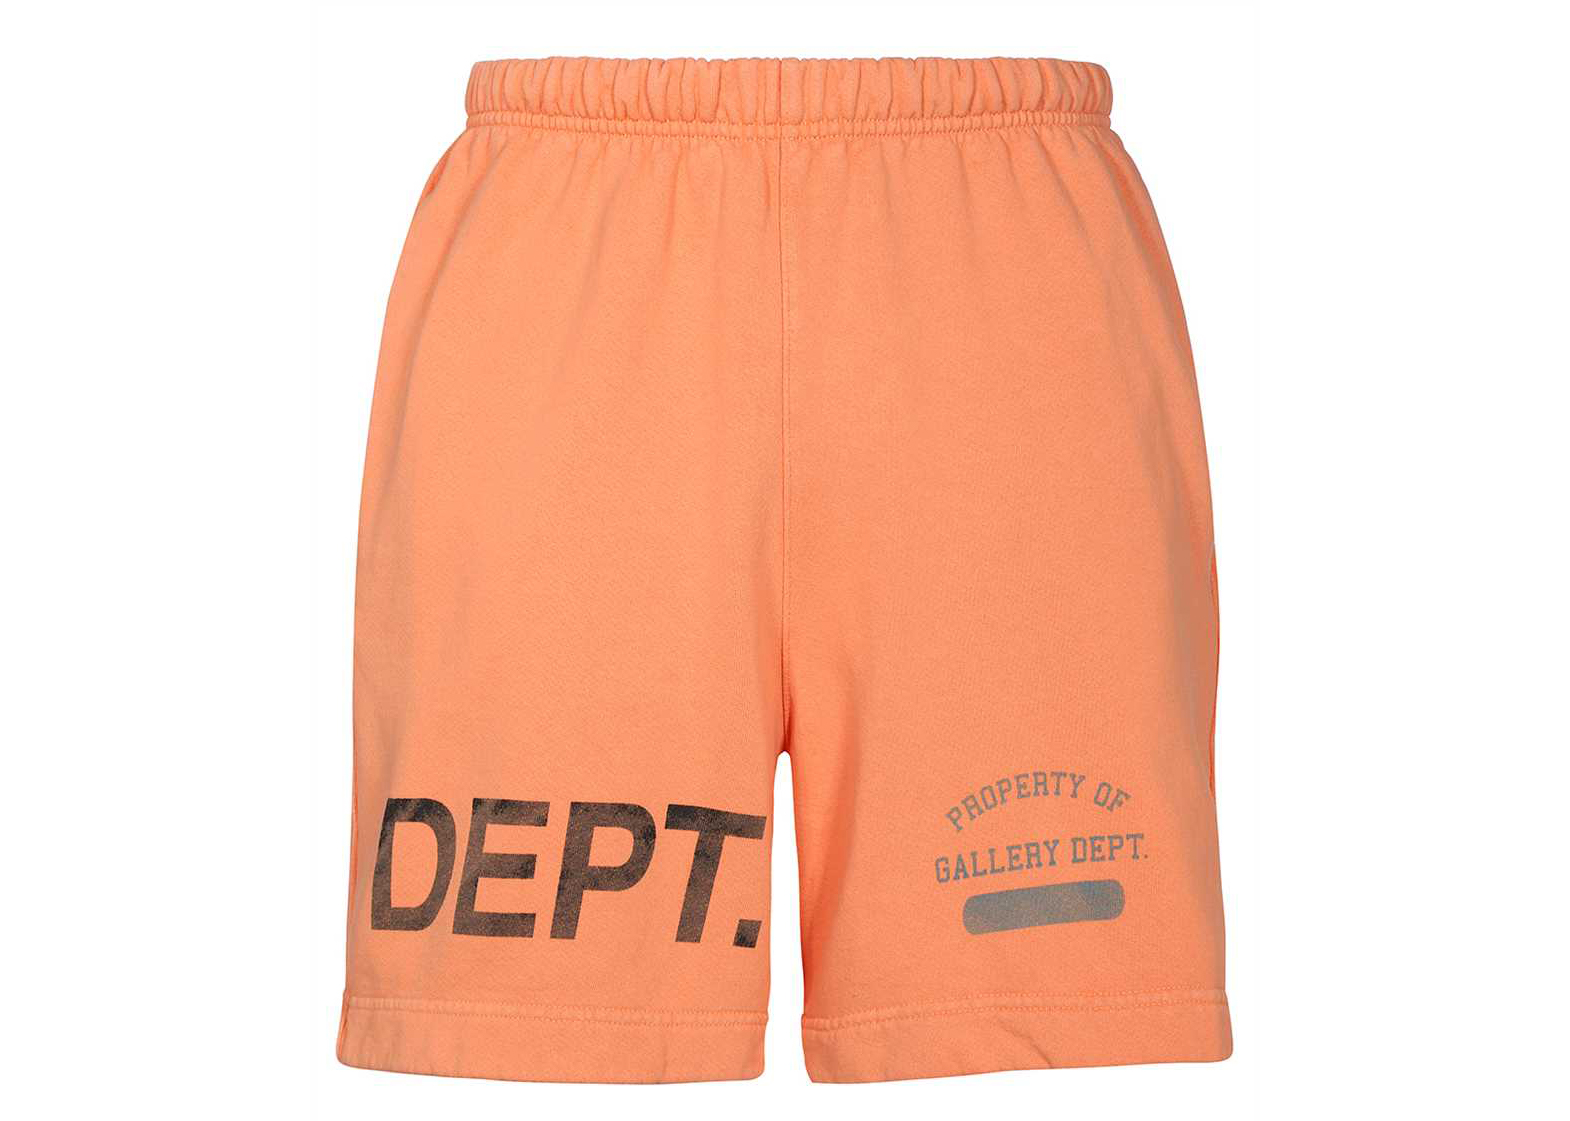 Gallery dept shorts